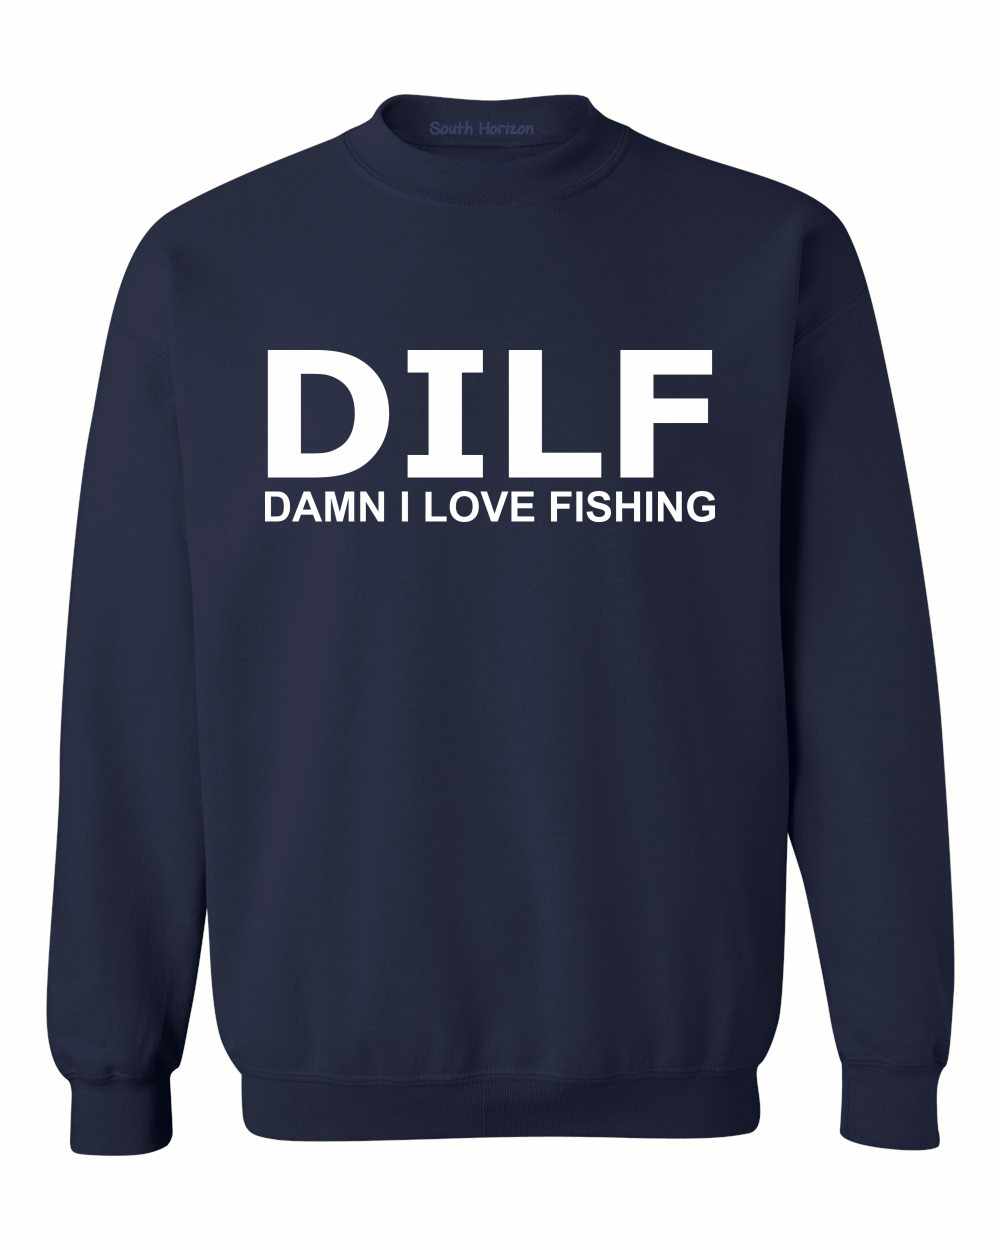 DILF Damn I Love Fishing on SweatShirt (#1219-11)